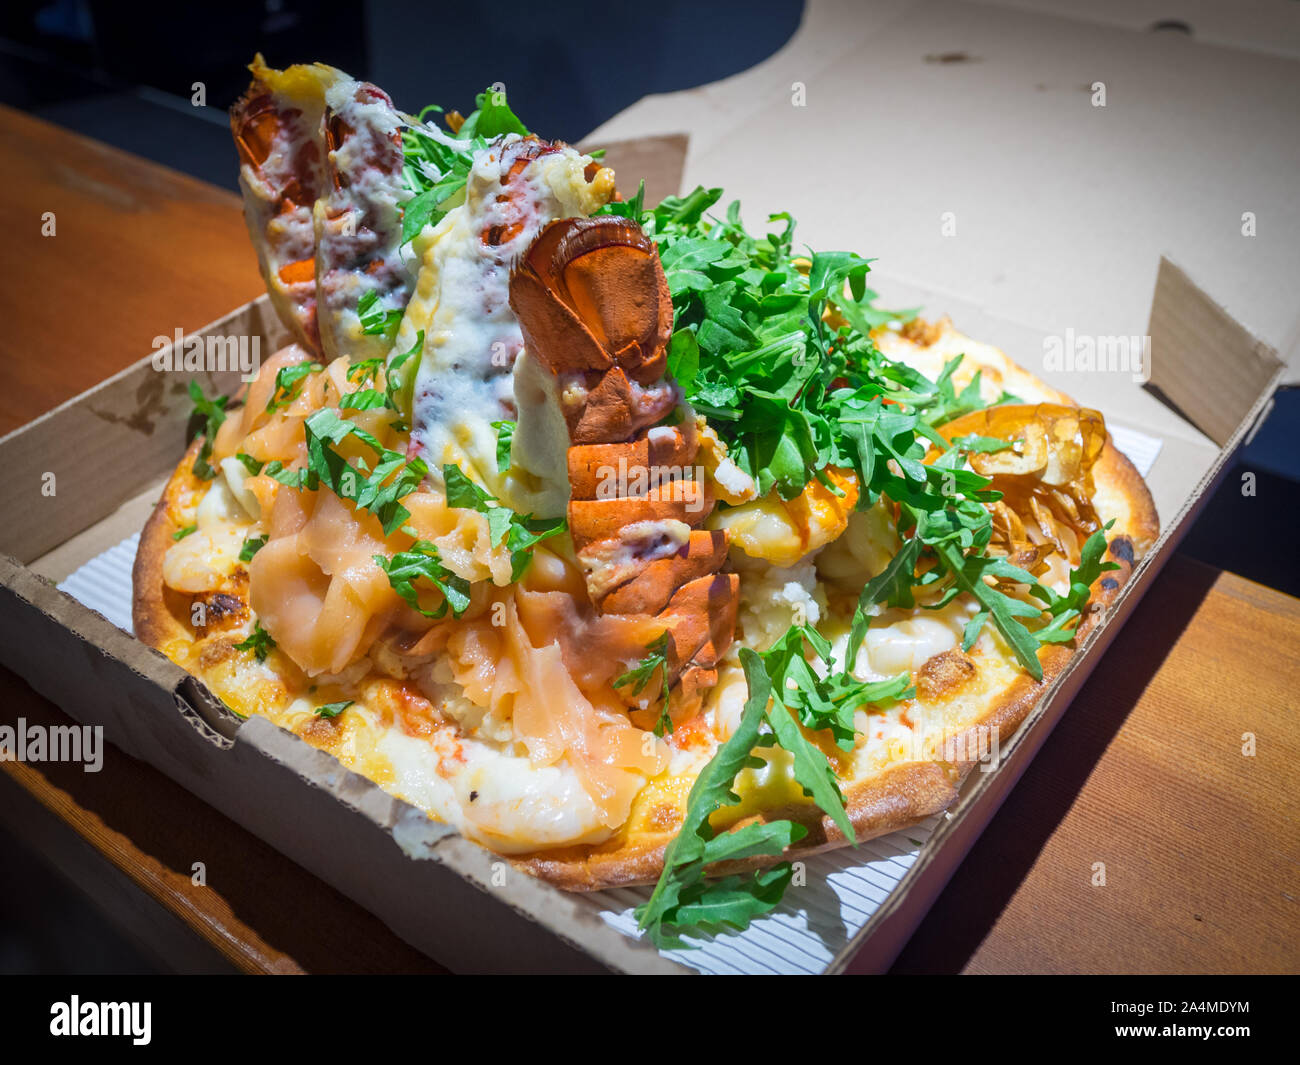 A serpent pizza (lobster tails, smoked salmon, prawns, shrimp) from Steveston Pizza Company in Steveston Village, Richmond, British Columbia, Canada. Stock Photo